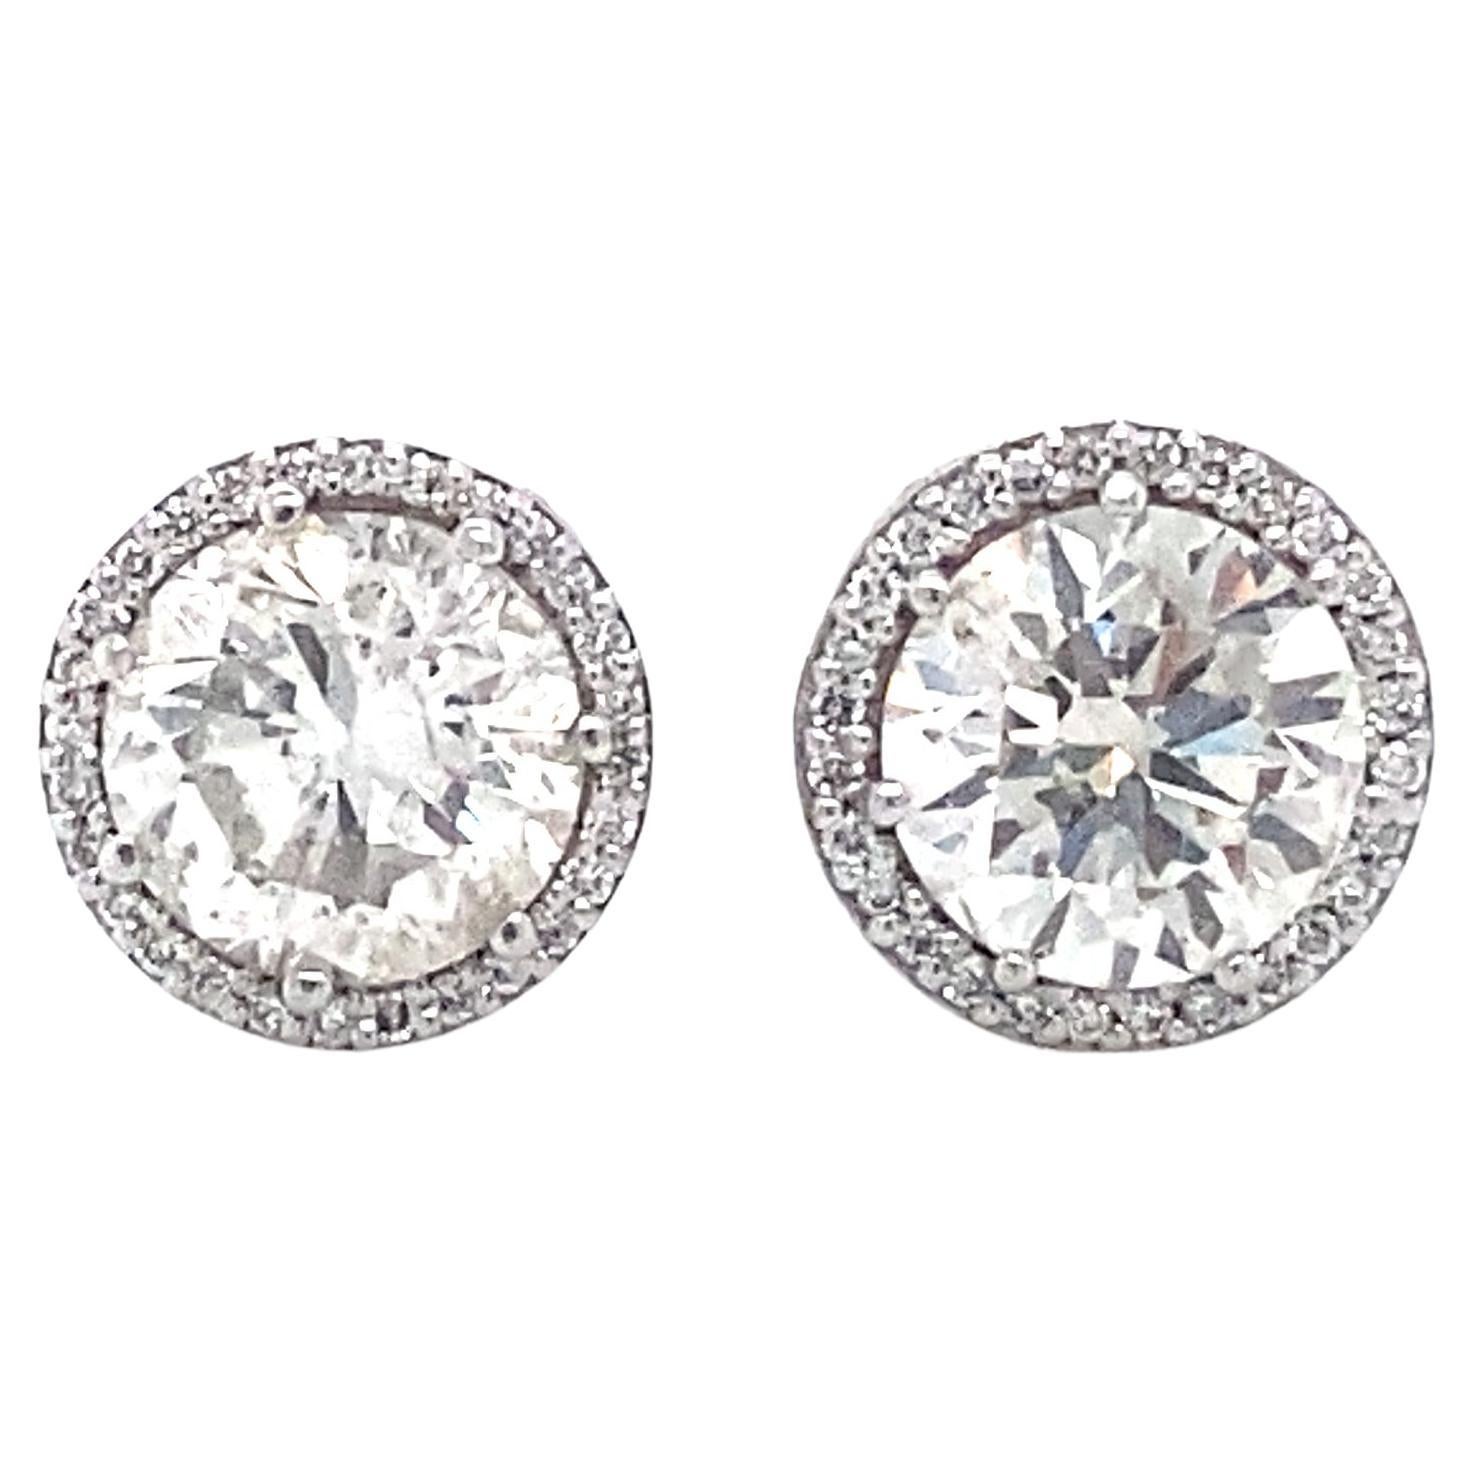 2.60 Carat Round Diamond Halo Stud Earrings in 14 Karat White Gold